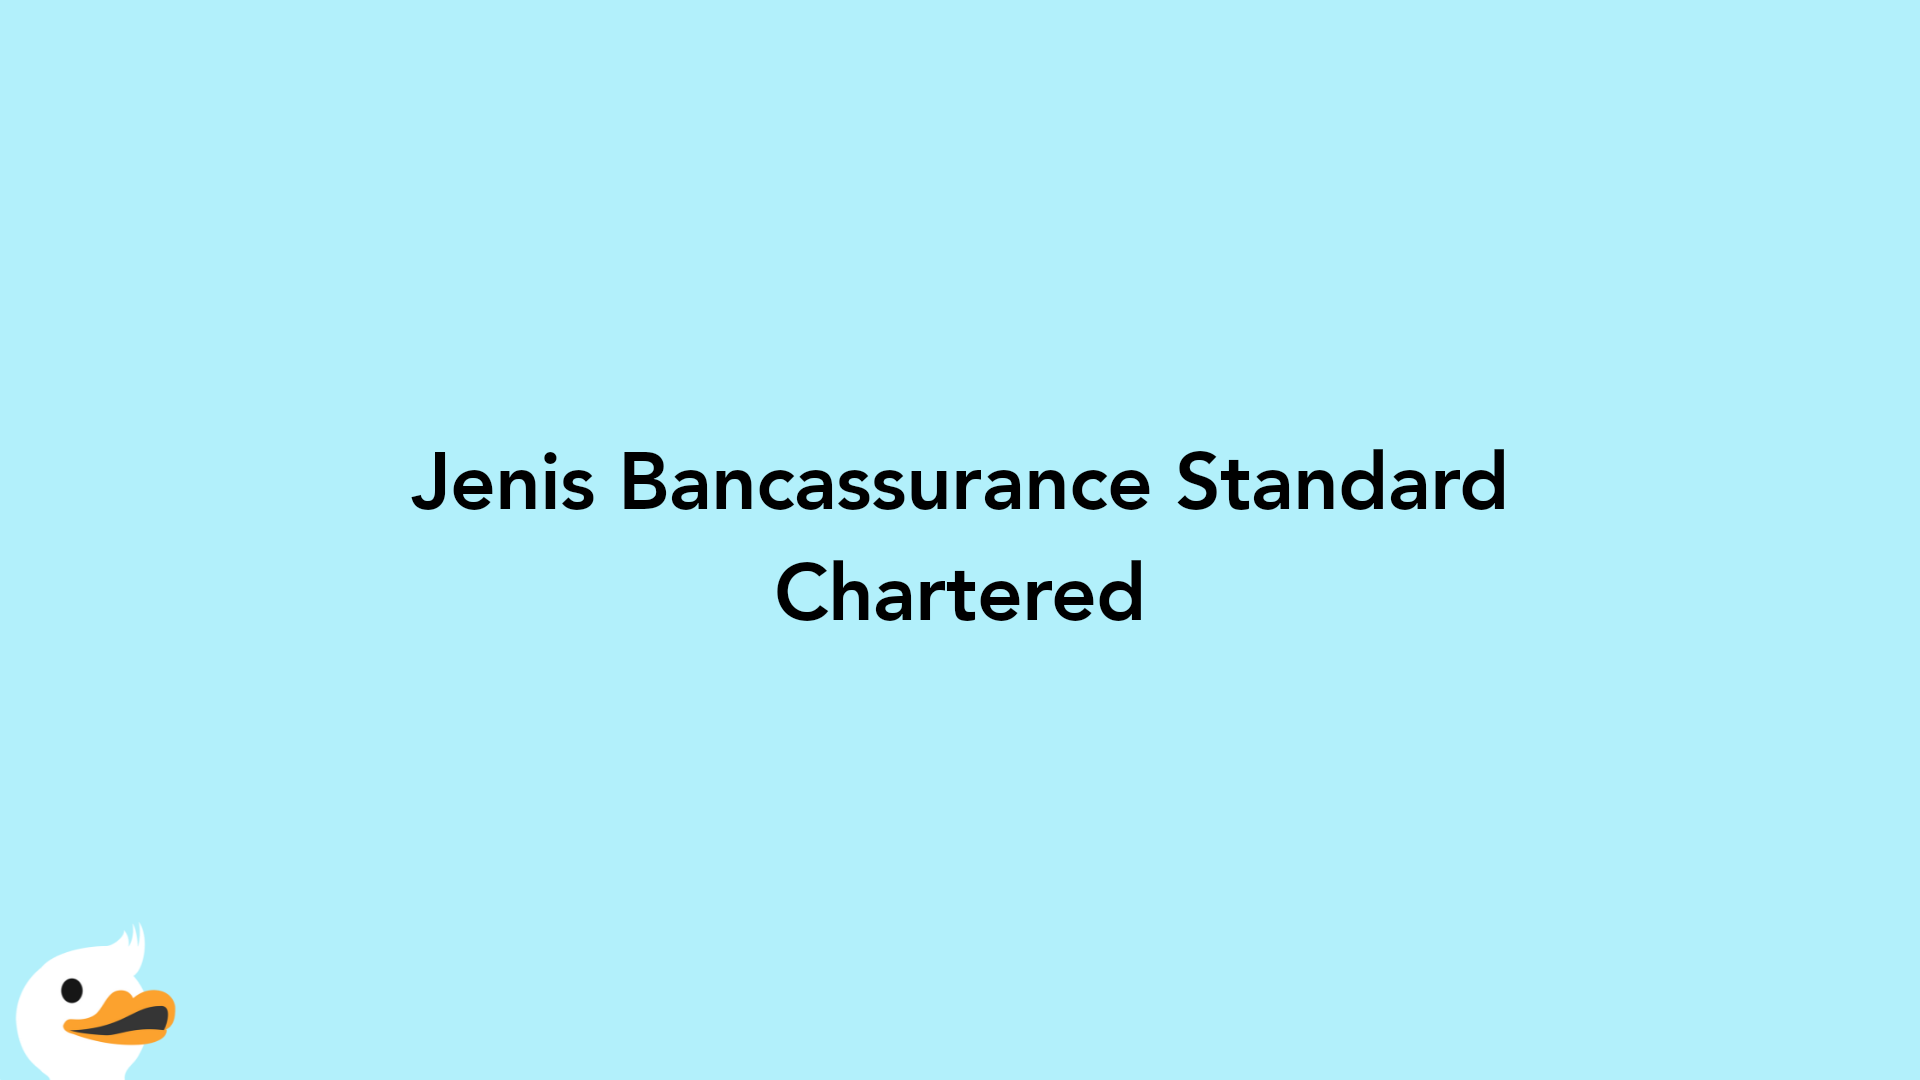 Jenis Bancassurance Standard Chartered